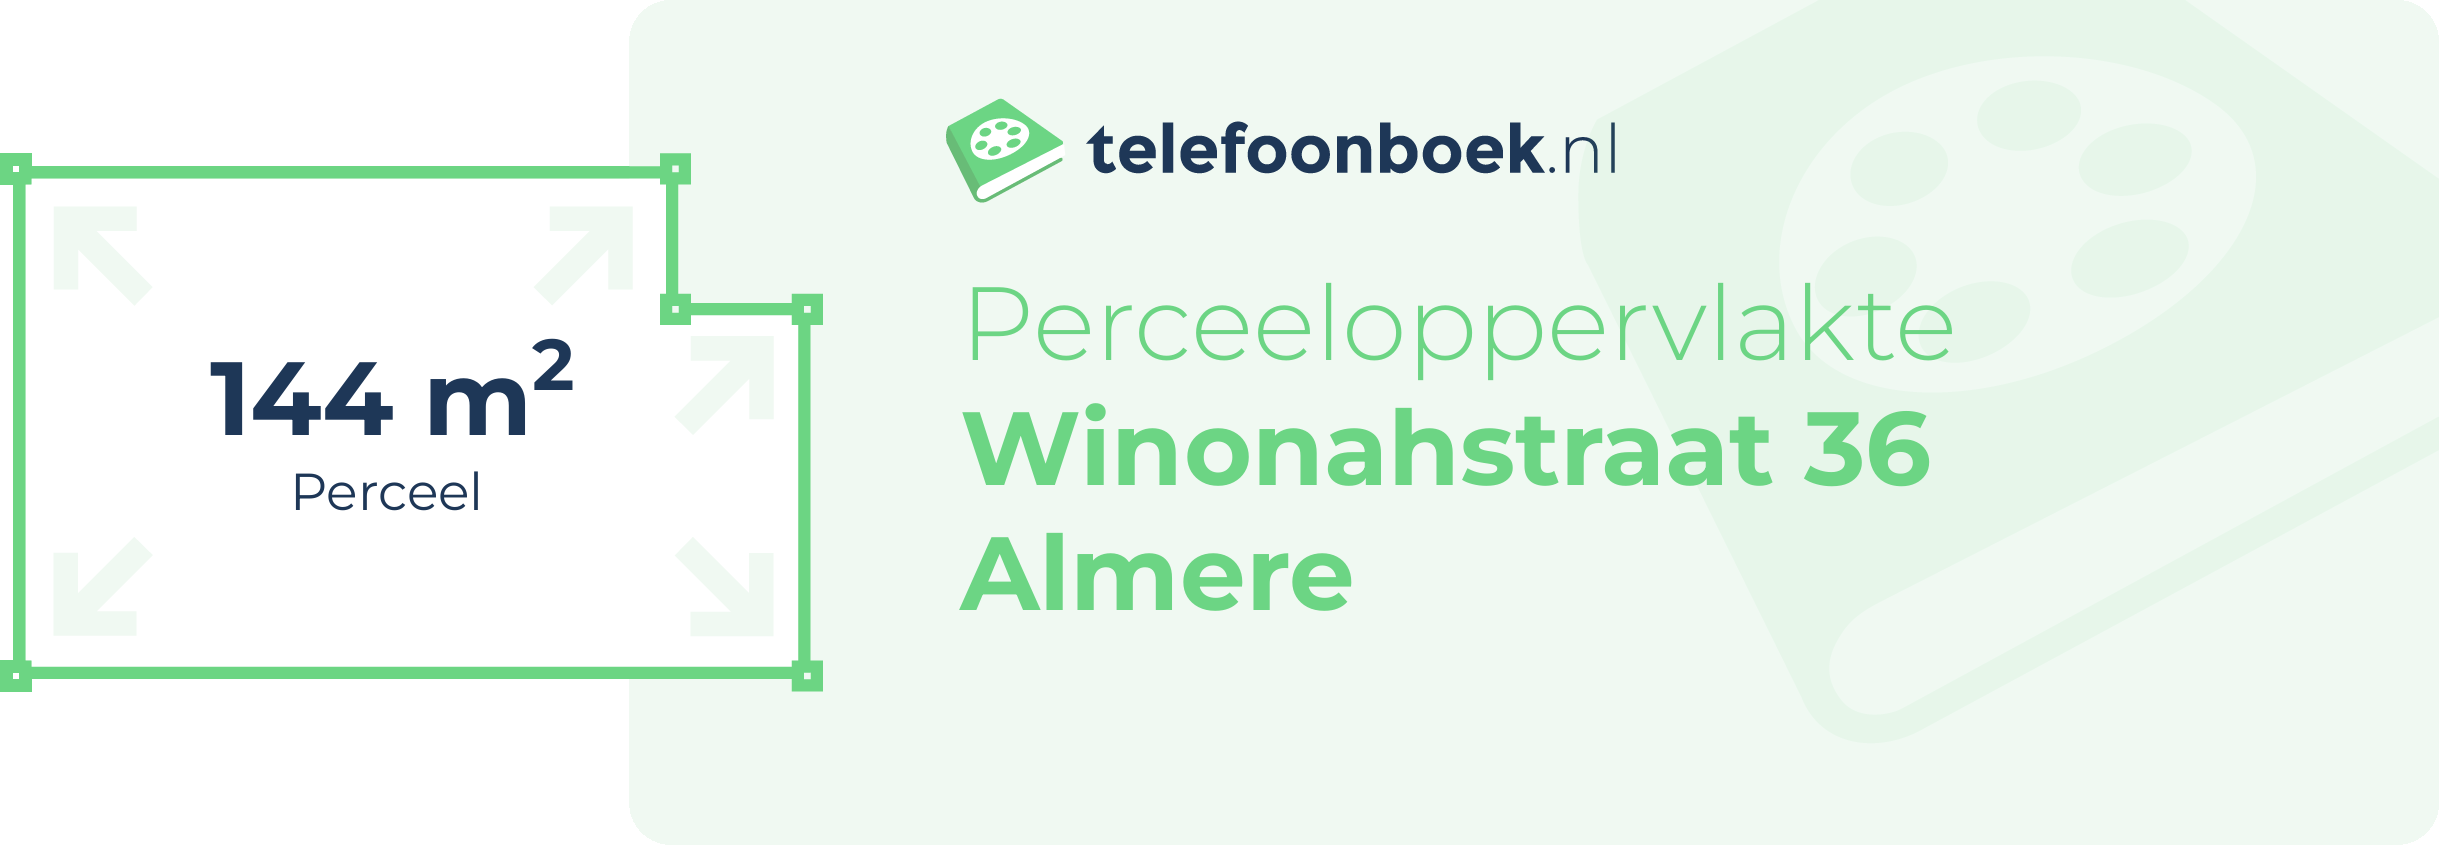 Perceeloppervlakte Winonahstraat 36 Almere